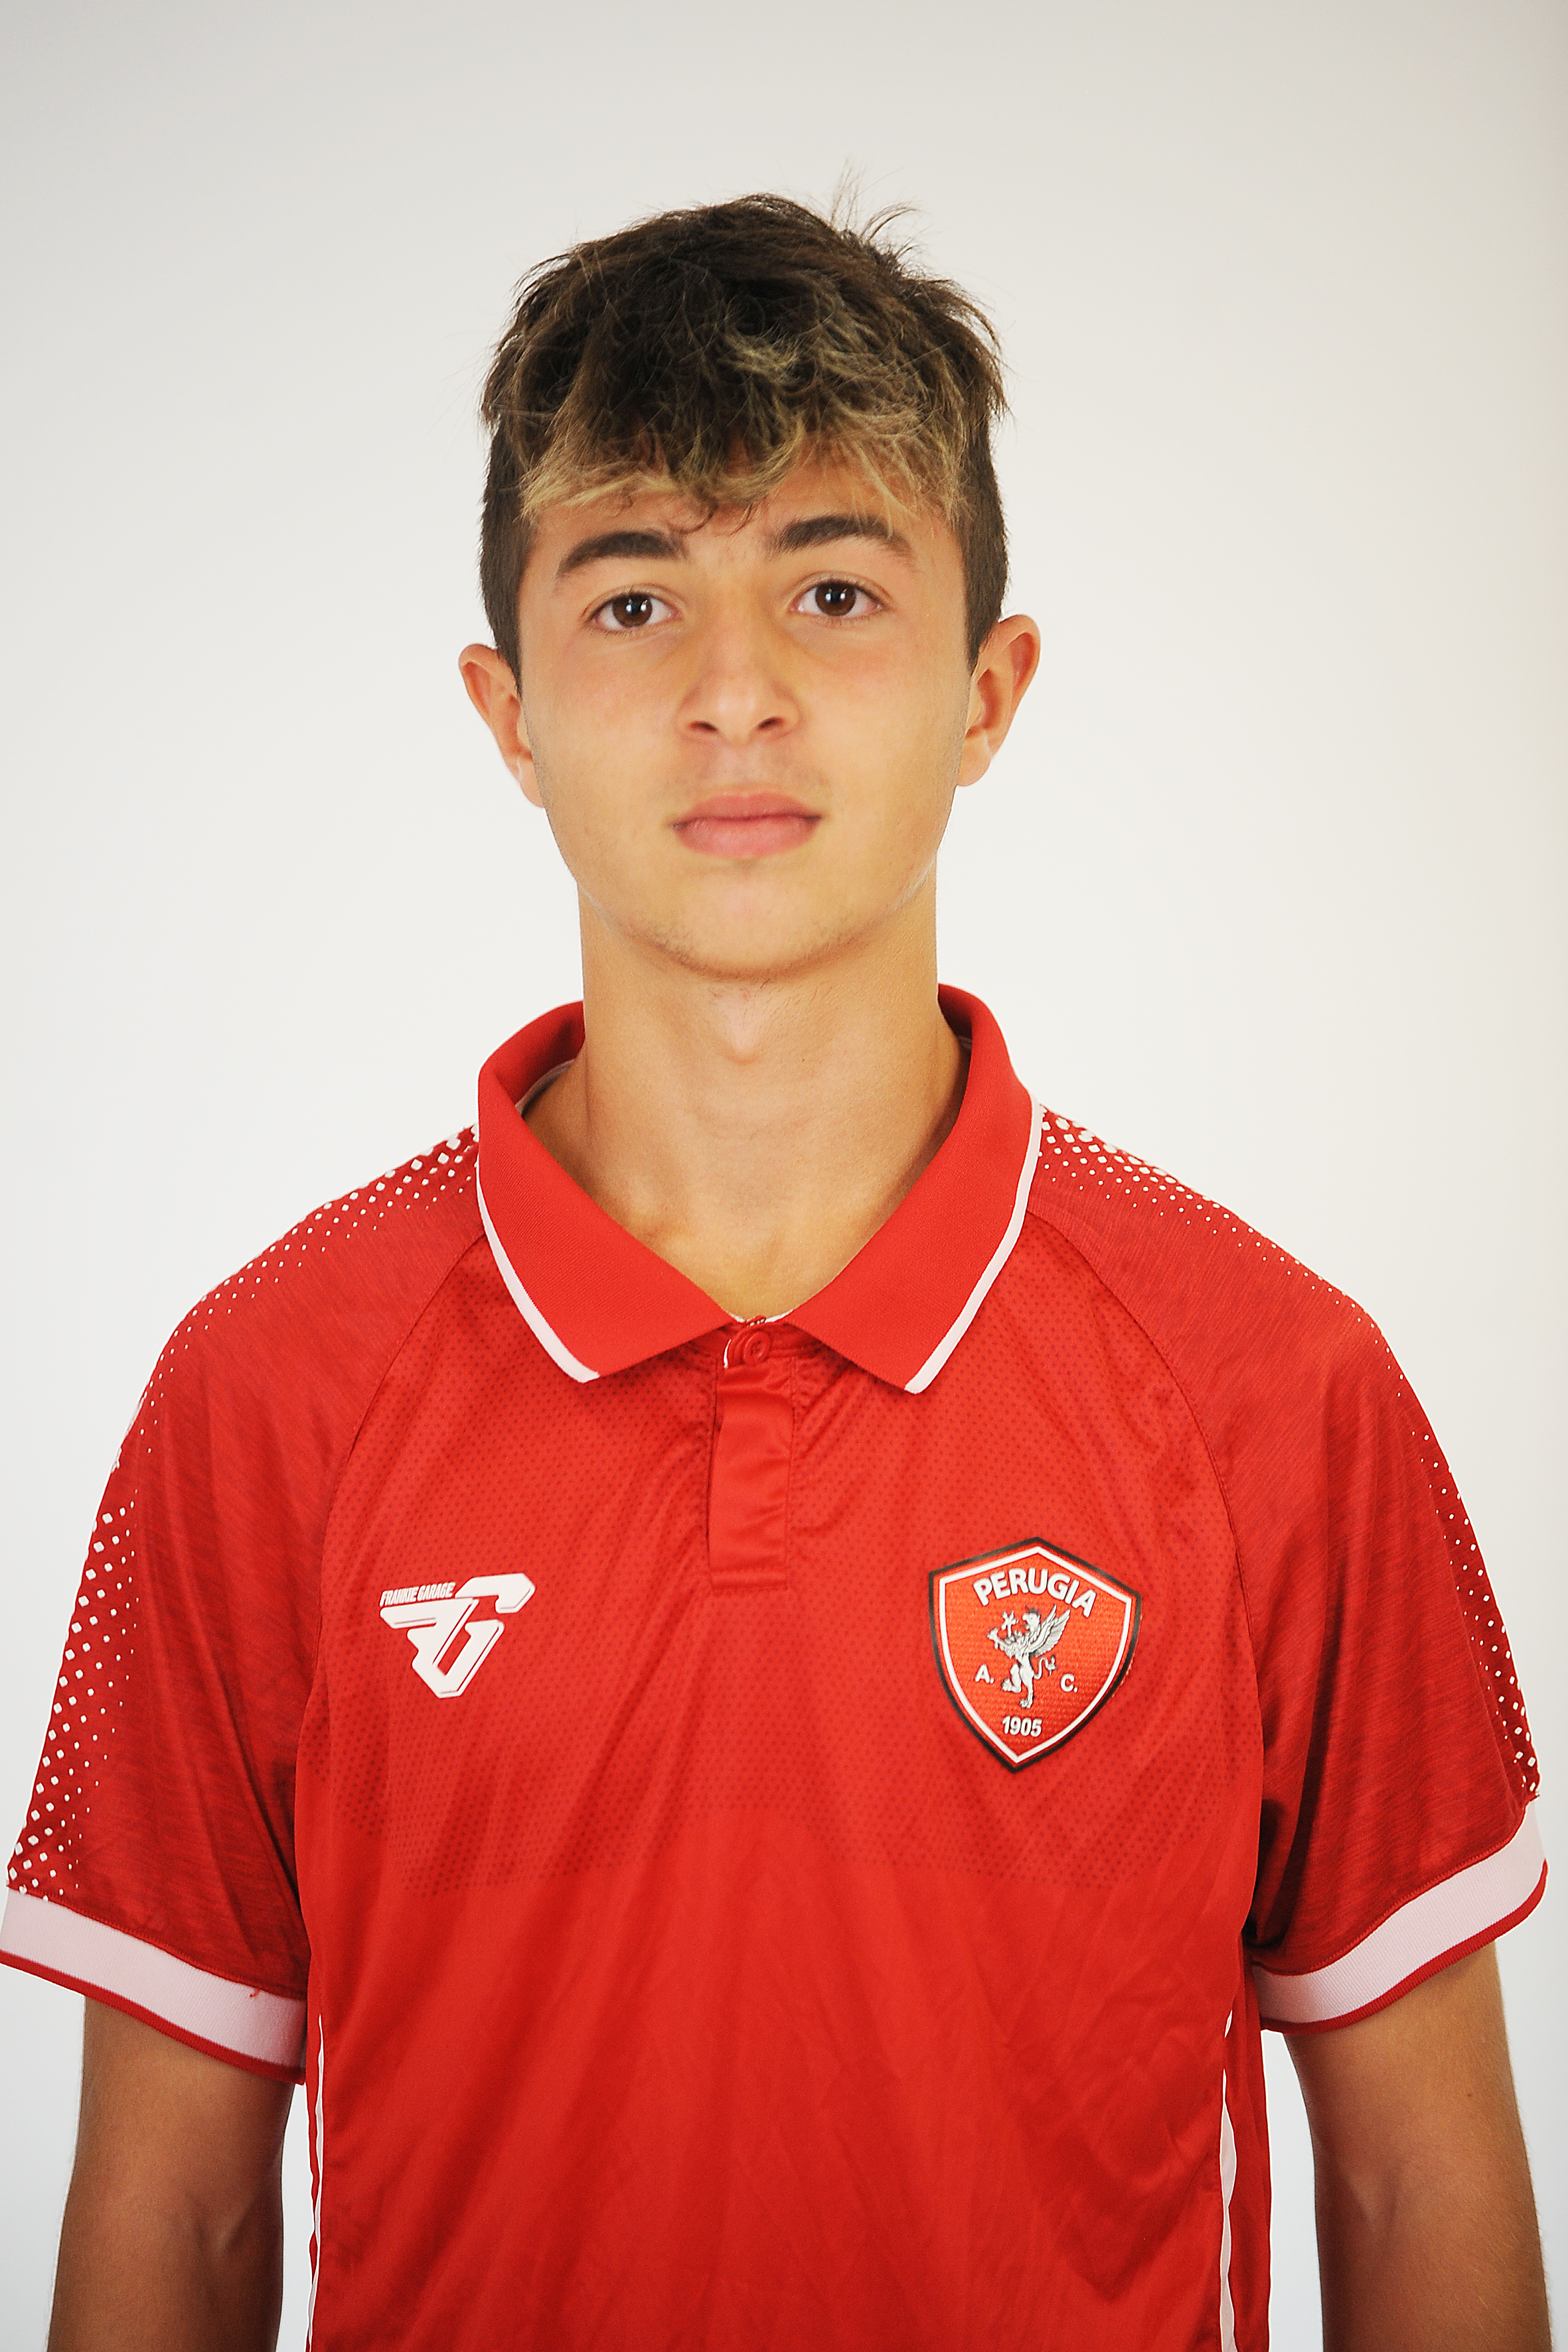 Francesco Virgillito Attaccante- A.C. Perugia Calcio